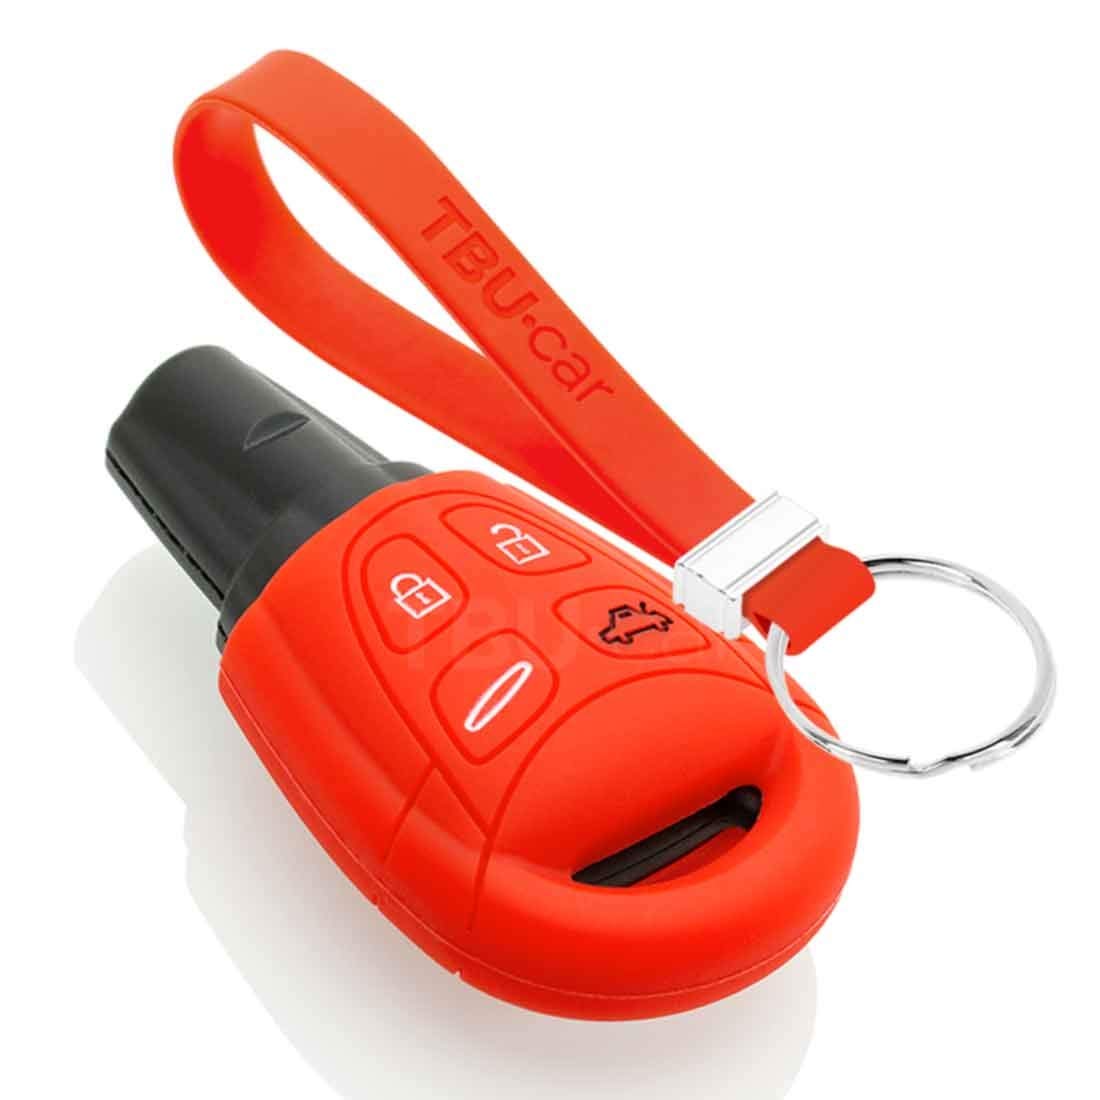 TBU car Autoschlüssel Hülle kompatibel mit Saab 4 Tasten - Schutzhülle aus Silikon - Auto Schlüsselhülle Cover in Rot von TBU car